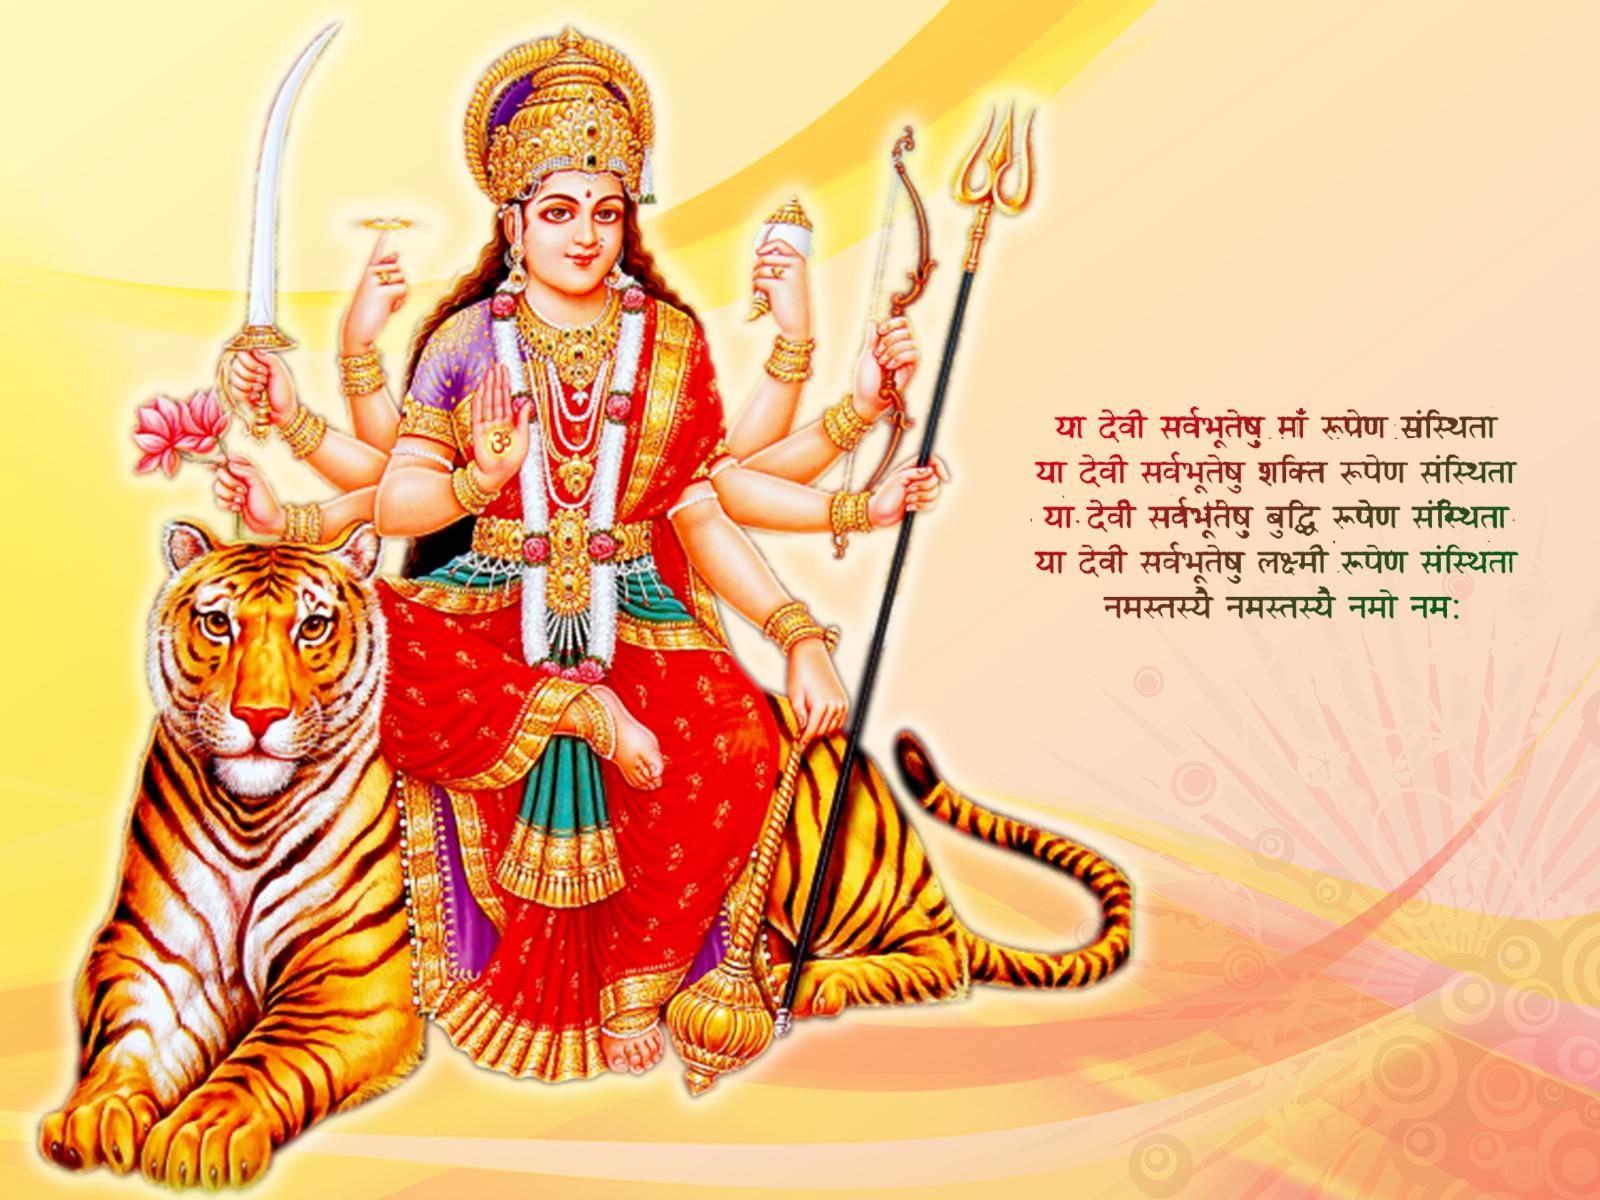 Jai Mata Di Goddess Durga Wallpaper